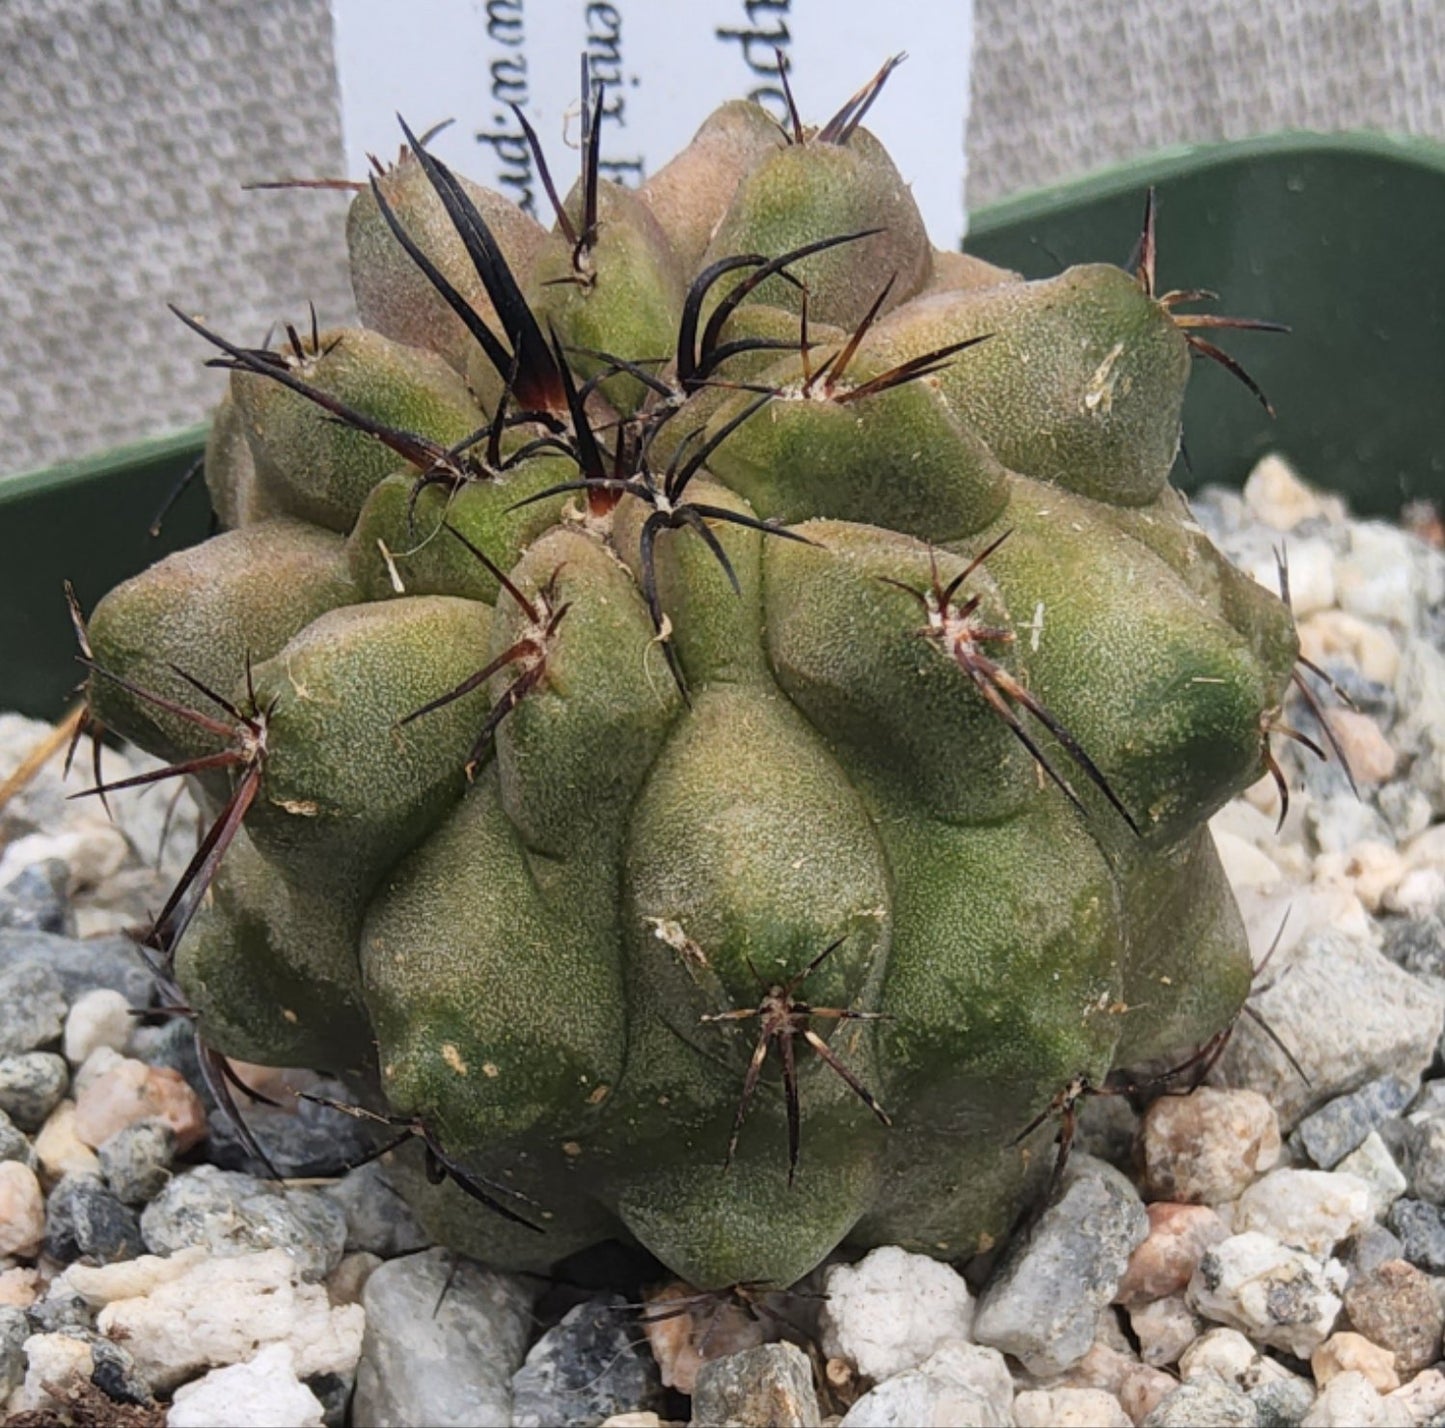 Copiapoa esmeraldana Live Cactus Growing in 4 Inch